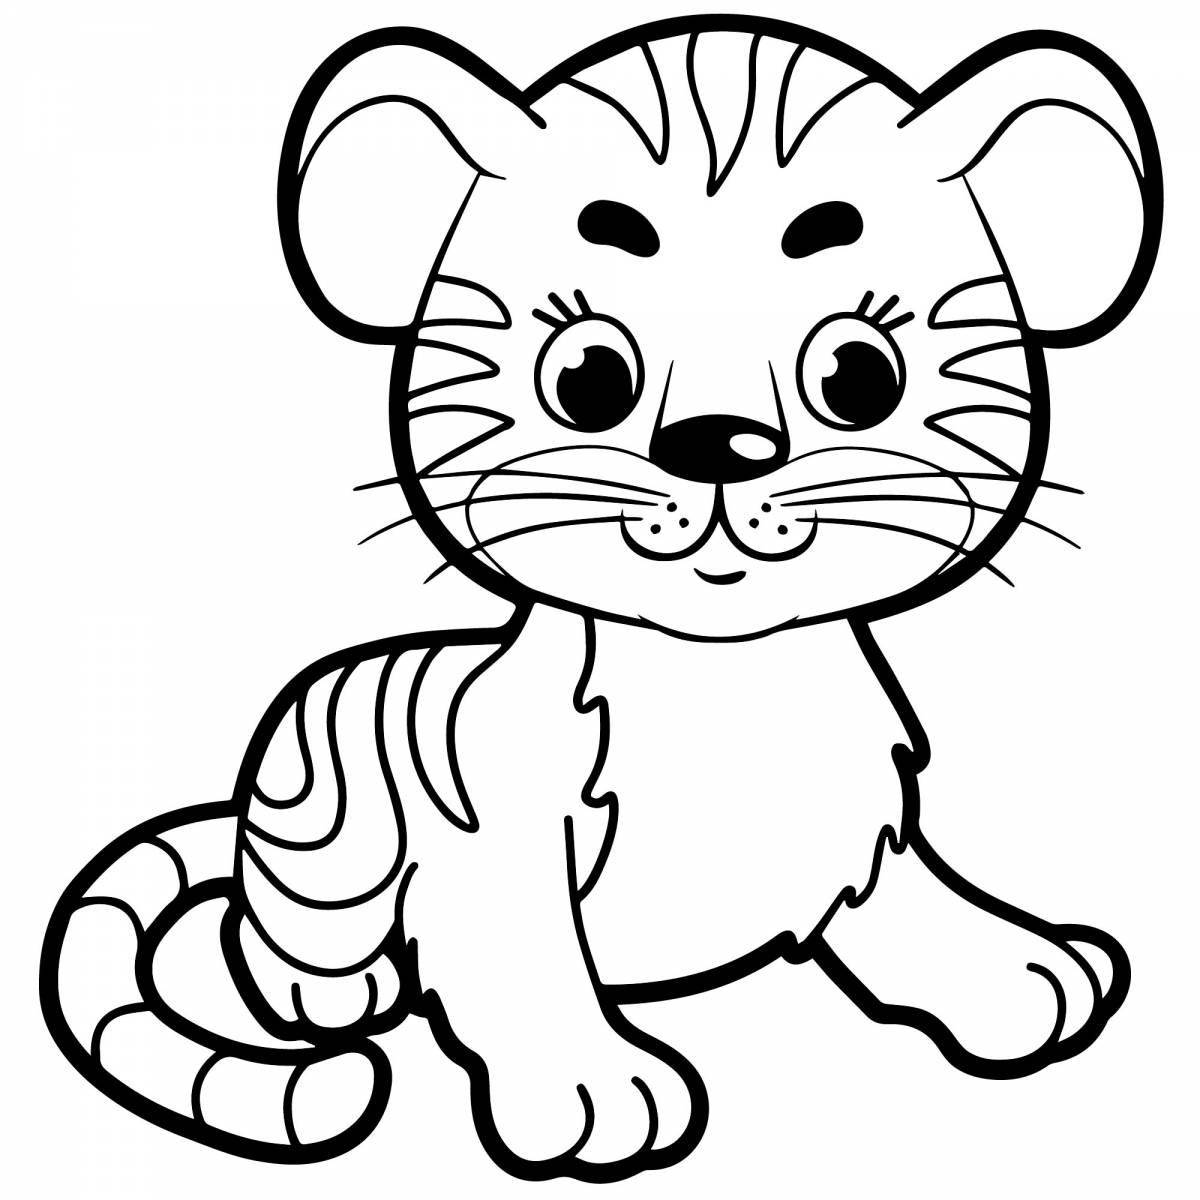 Rampant tiger cub coloring page